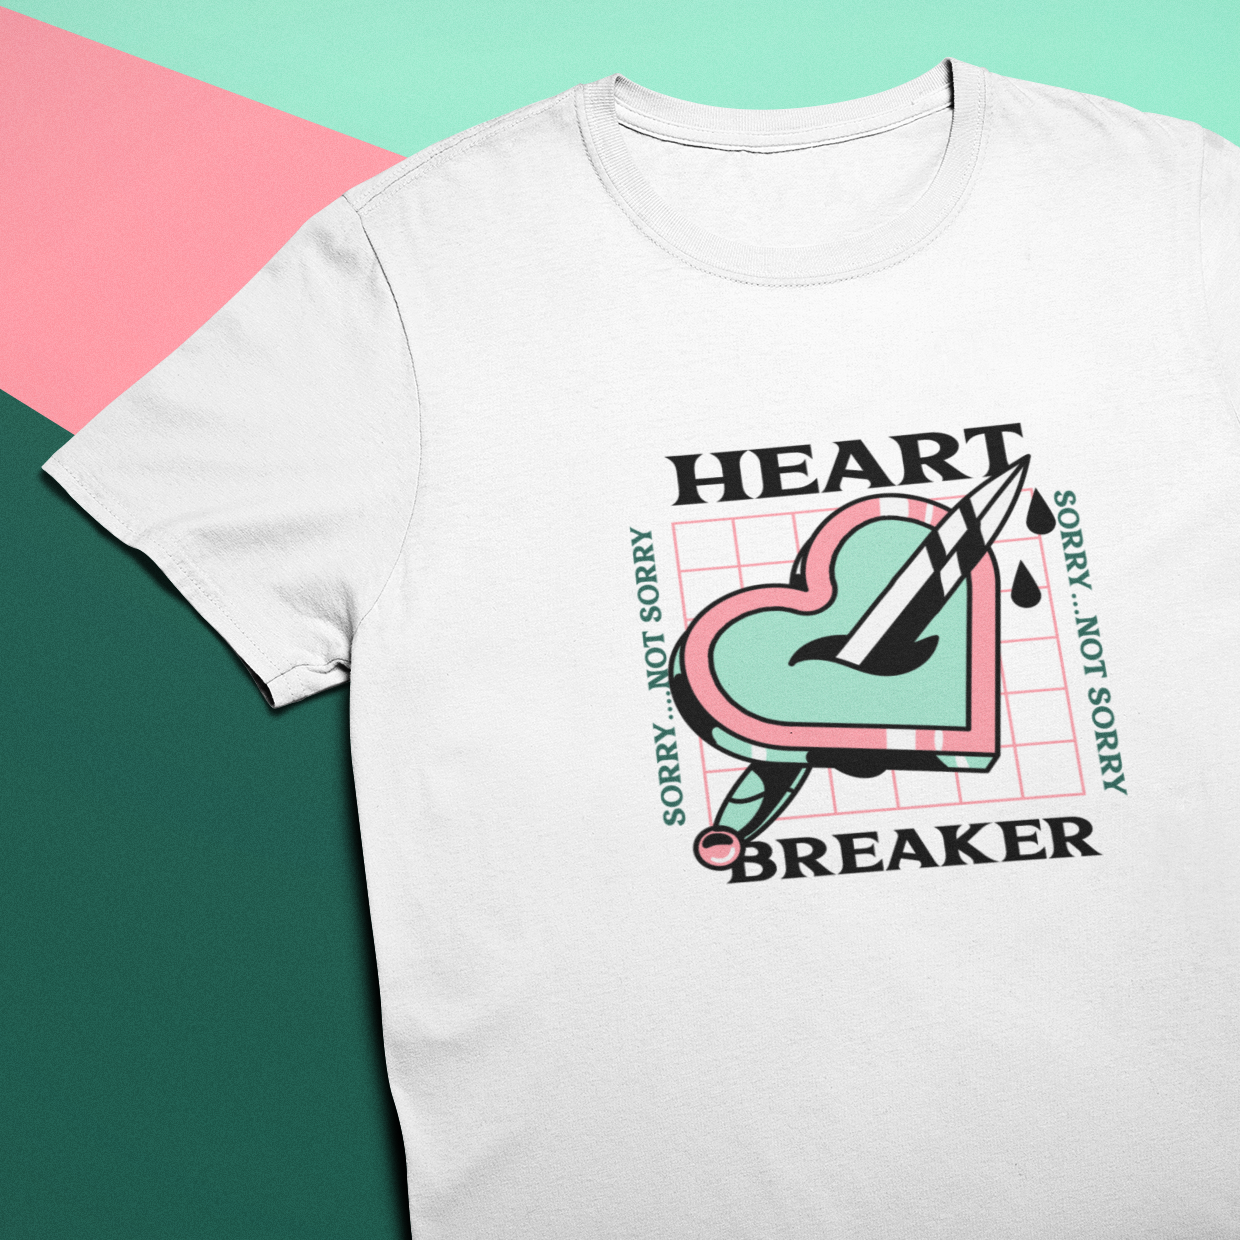 Heart Breaker Tee Shirt